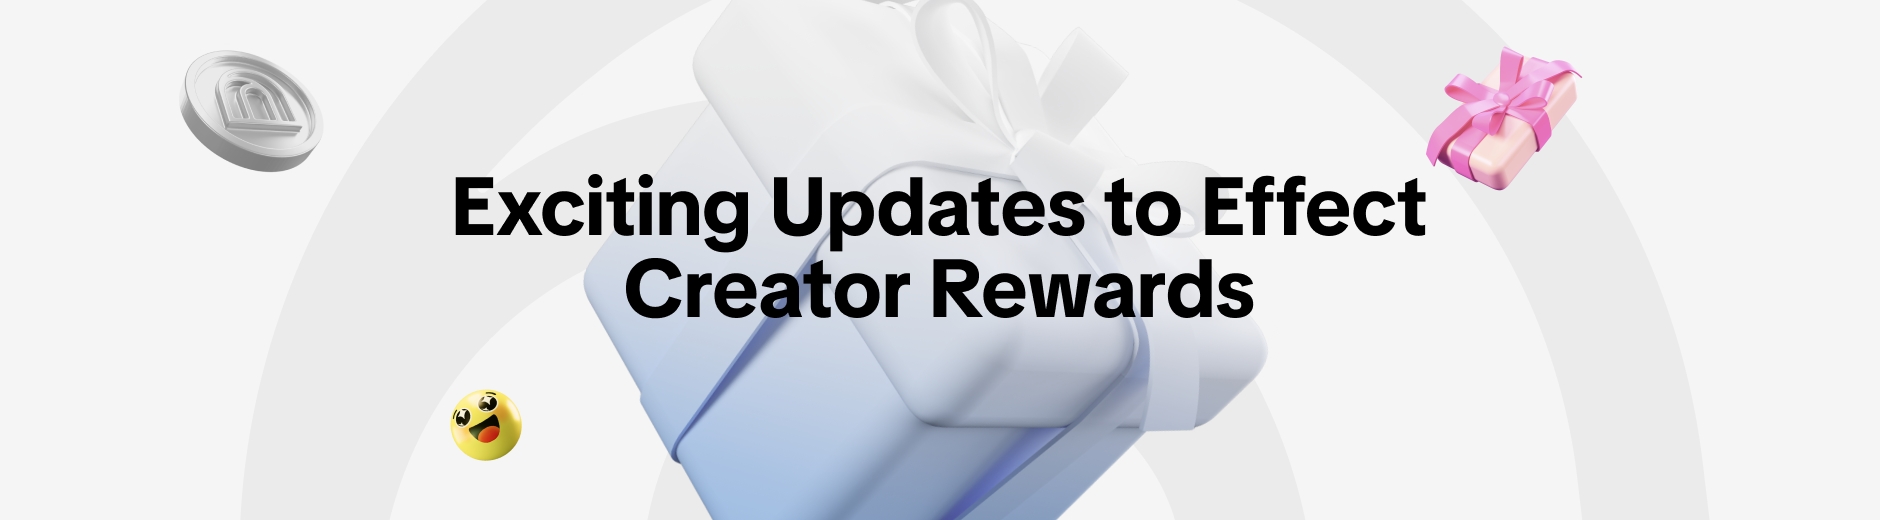 effect-creator-rewards-update